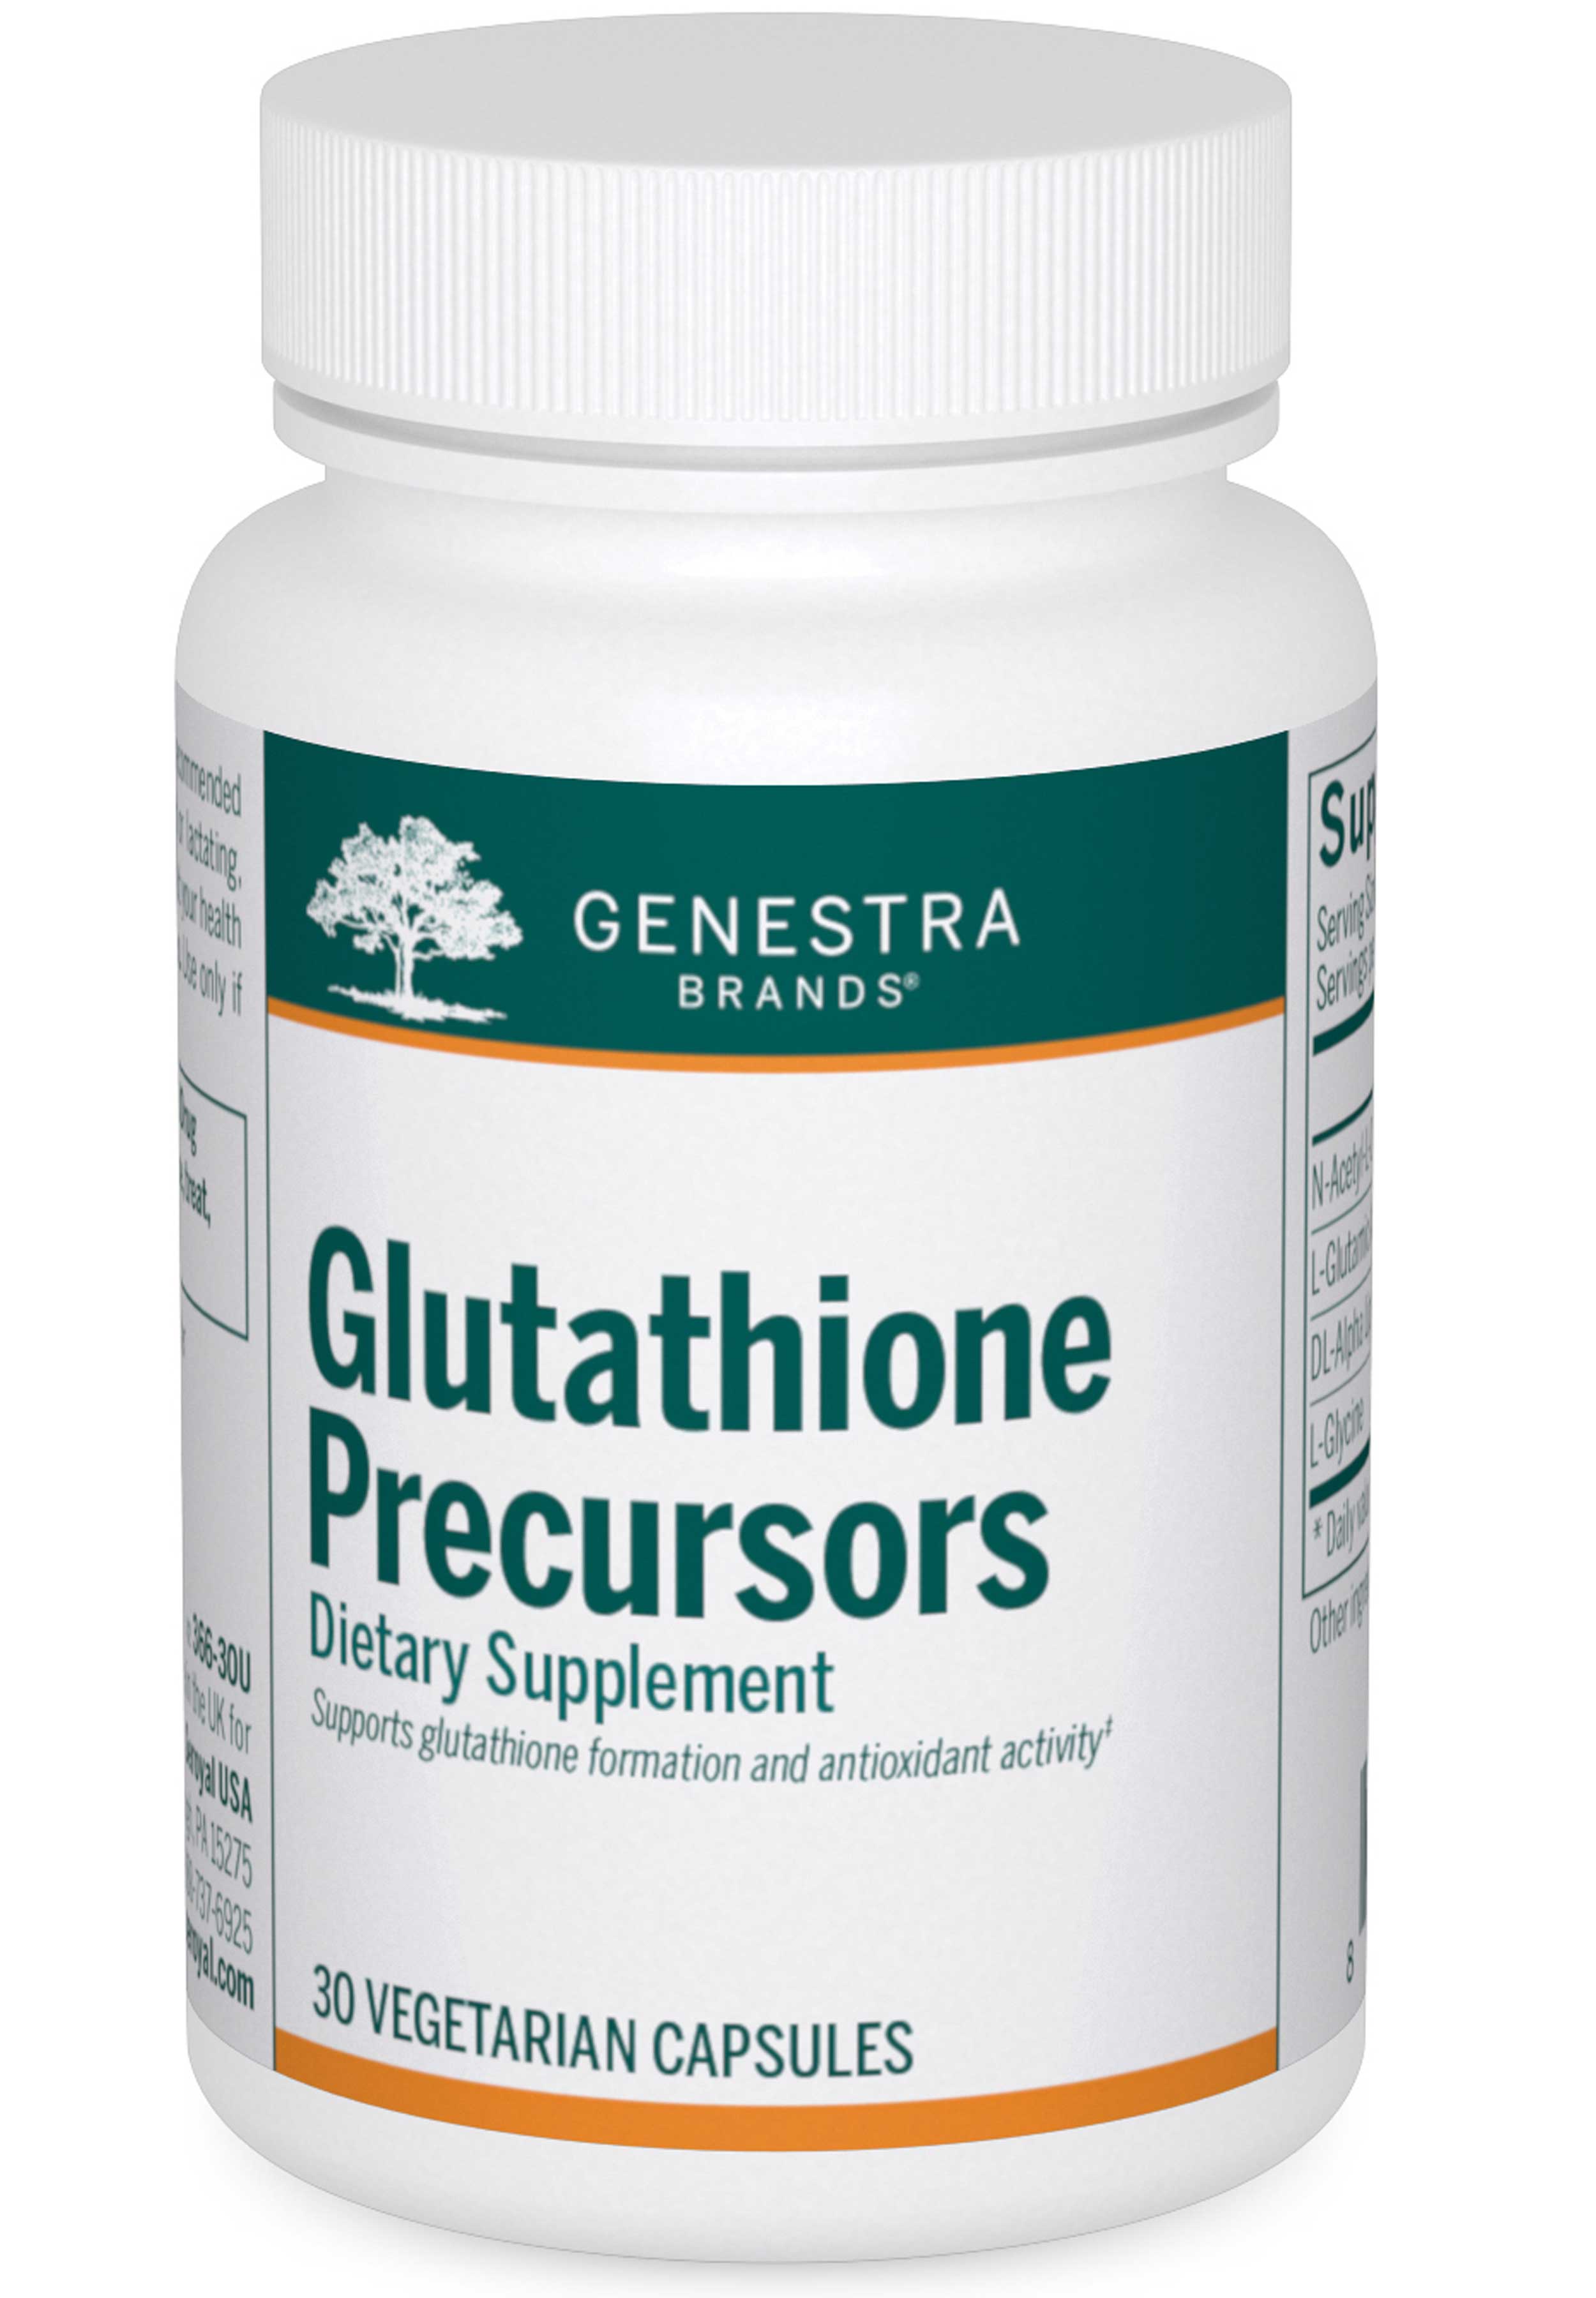 Genestra Brands Glutathione Precursors